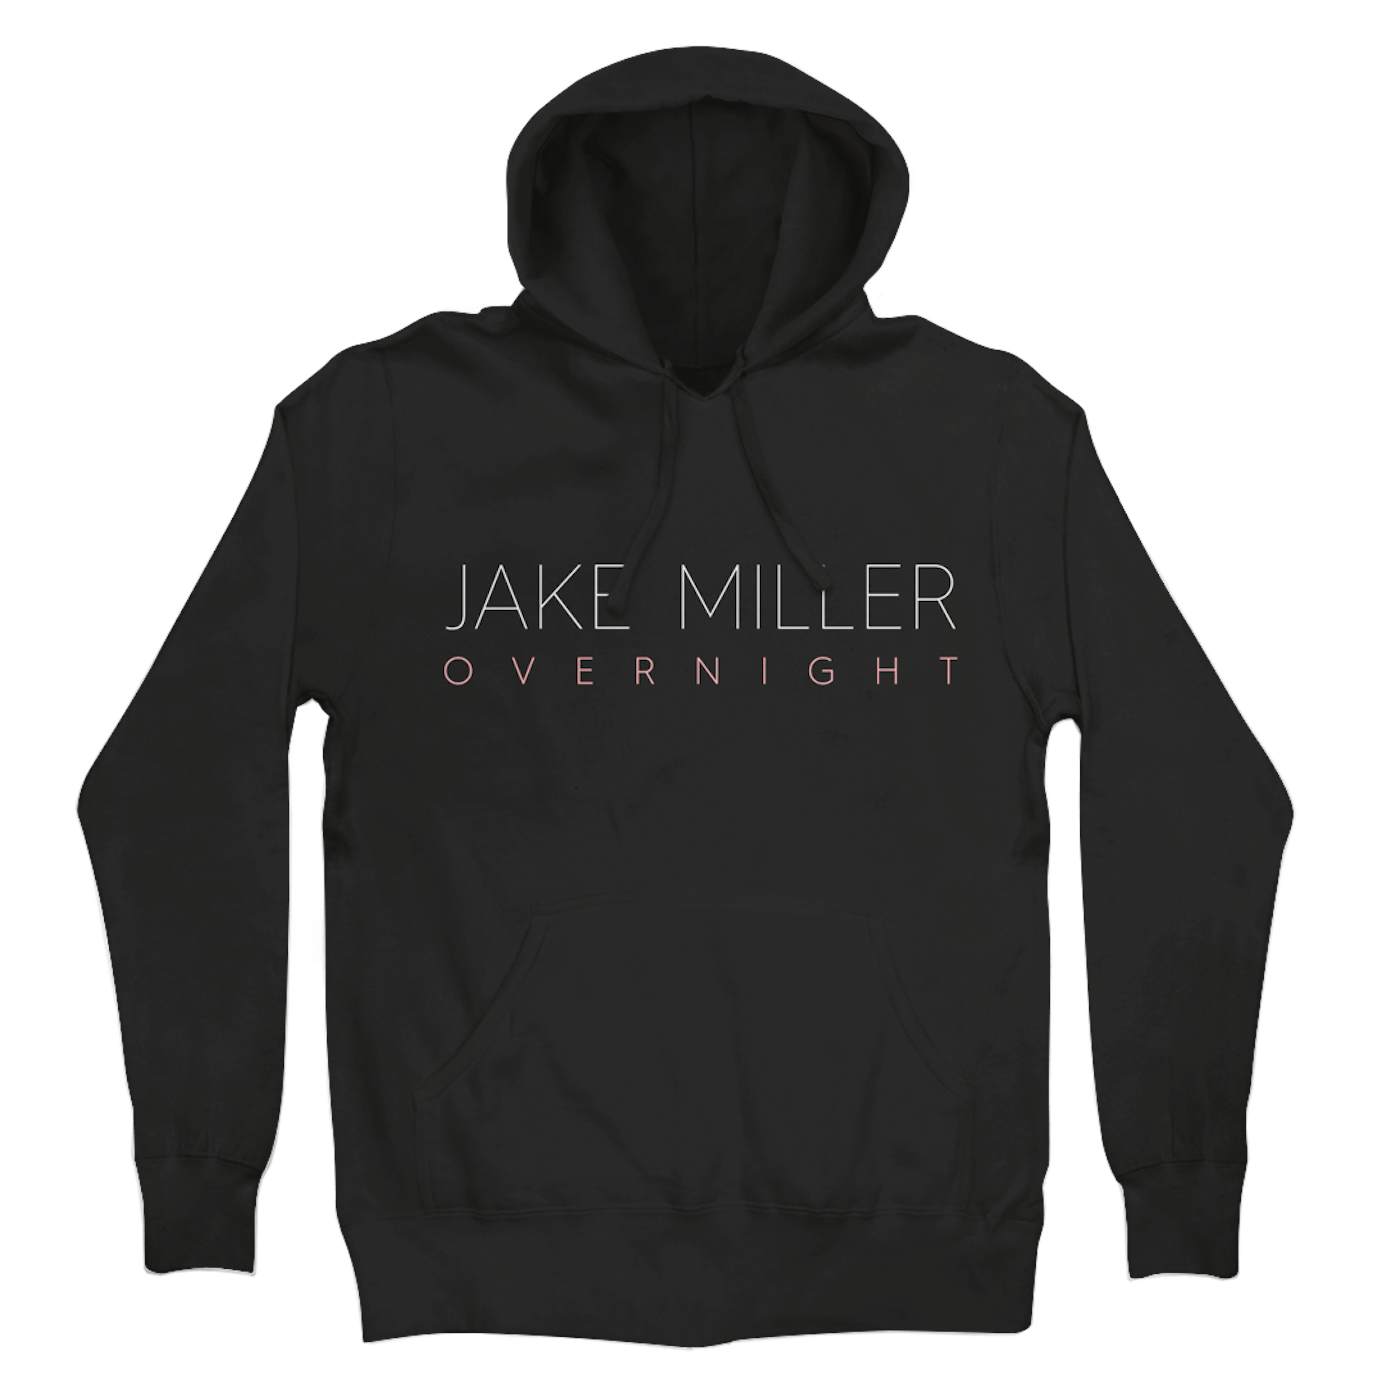 Jake Miller Overnight Hoodie